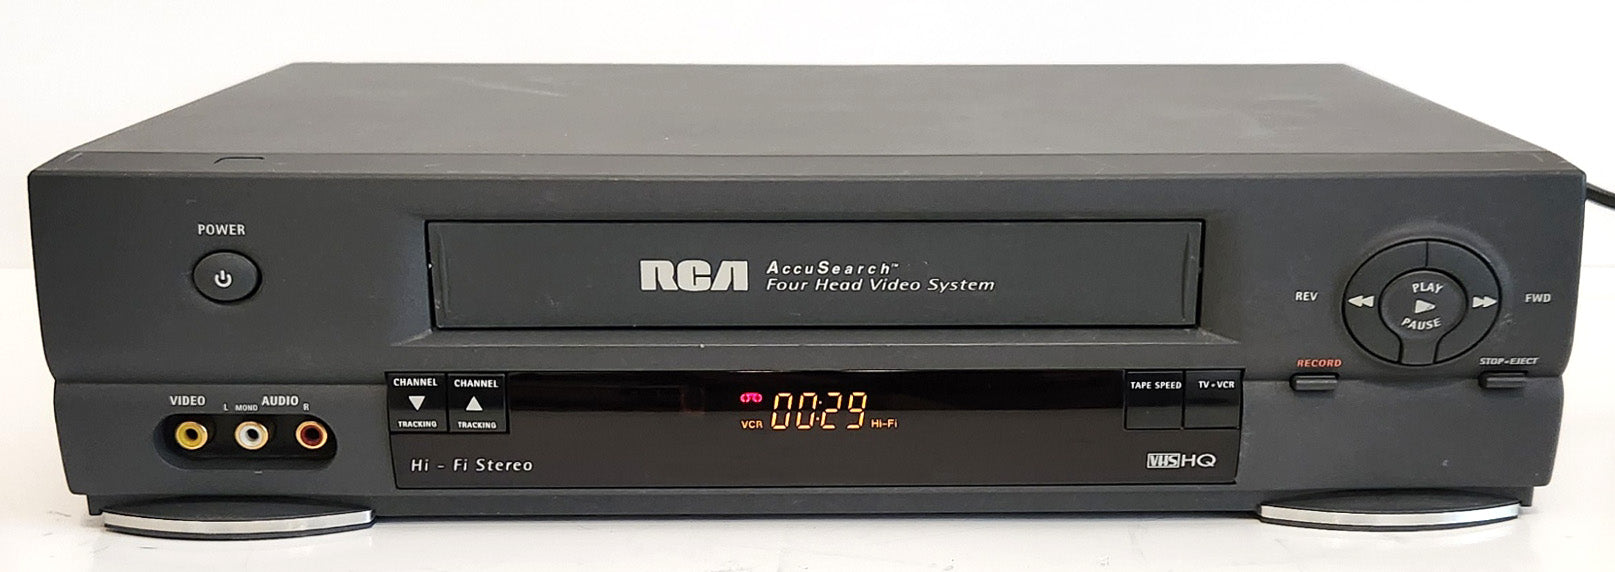 RCA VR623HF VCR, 4-Head Hi-Fi Stereo - Front